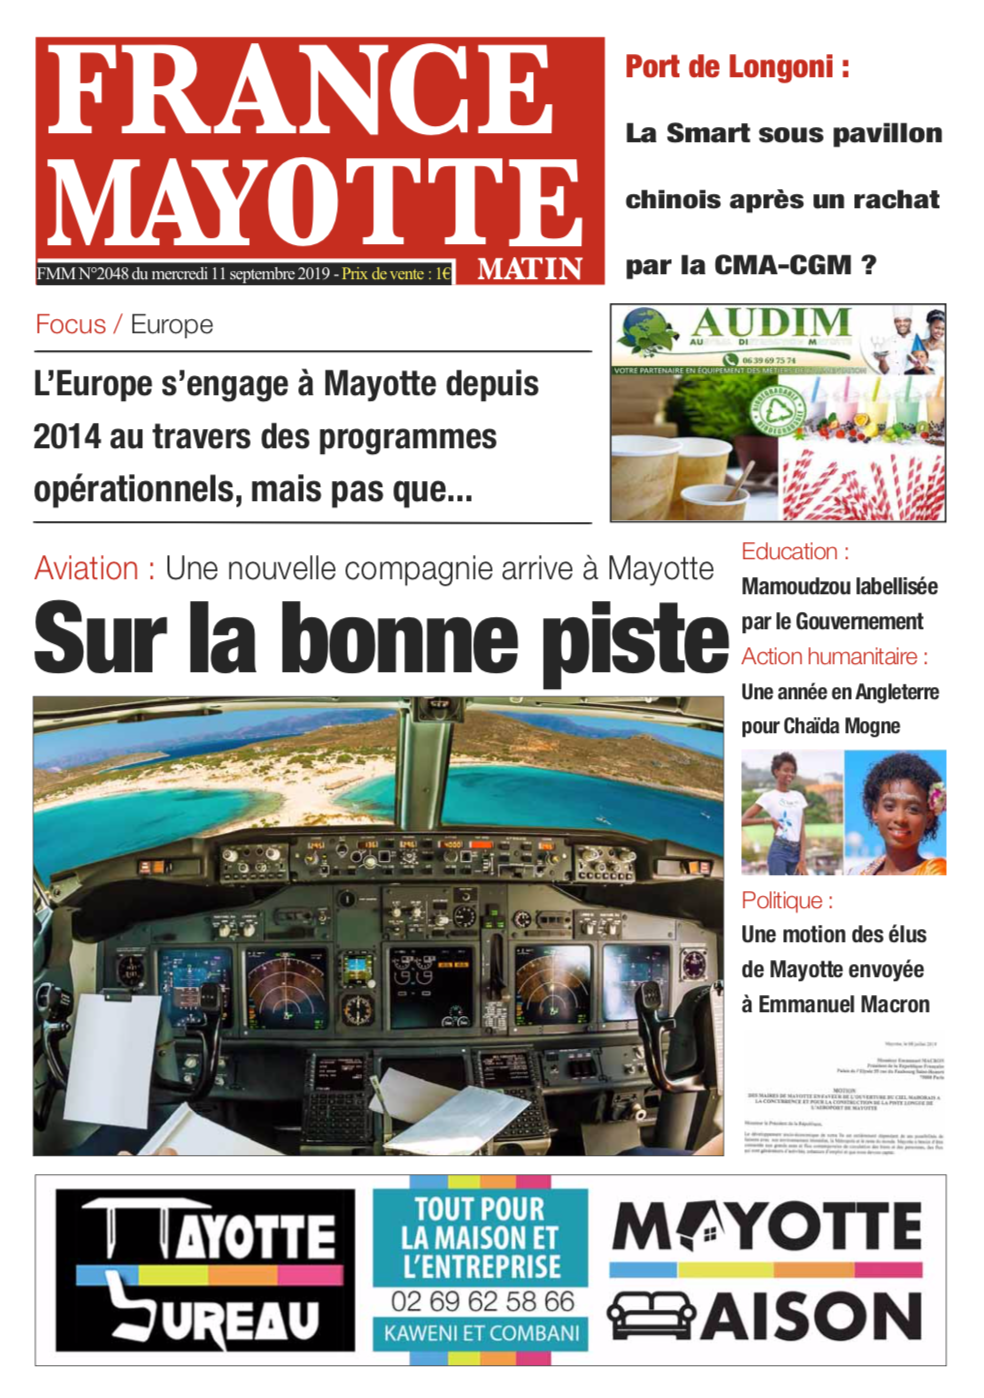 France Mayotte Mercredi 11 septembre 2019